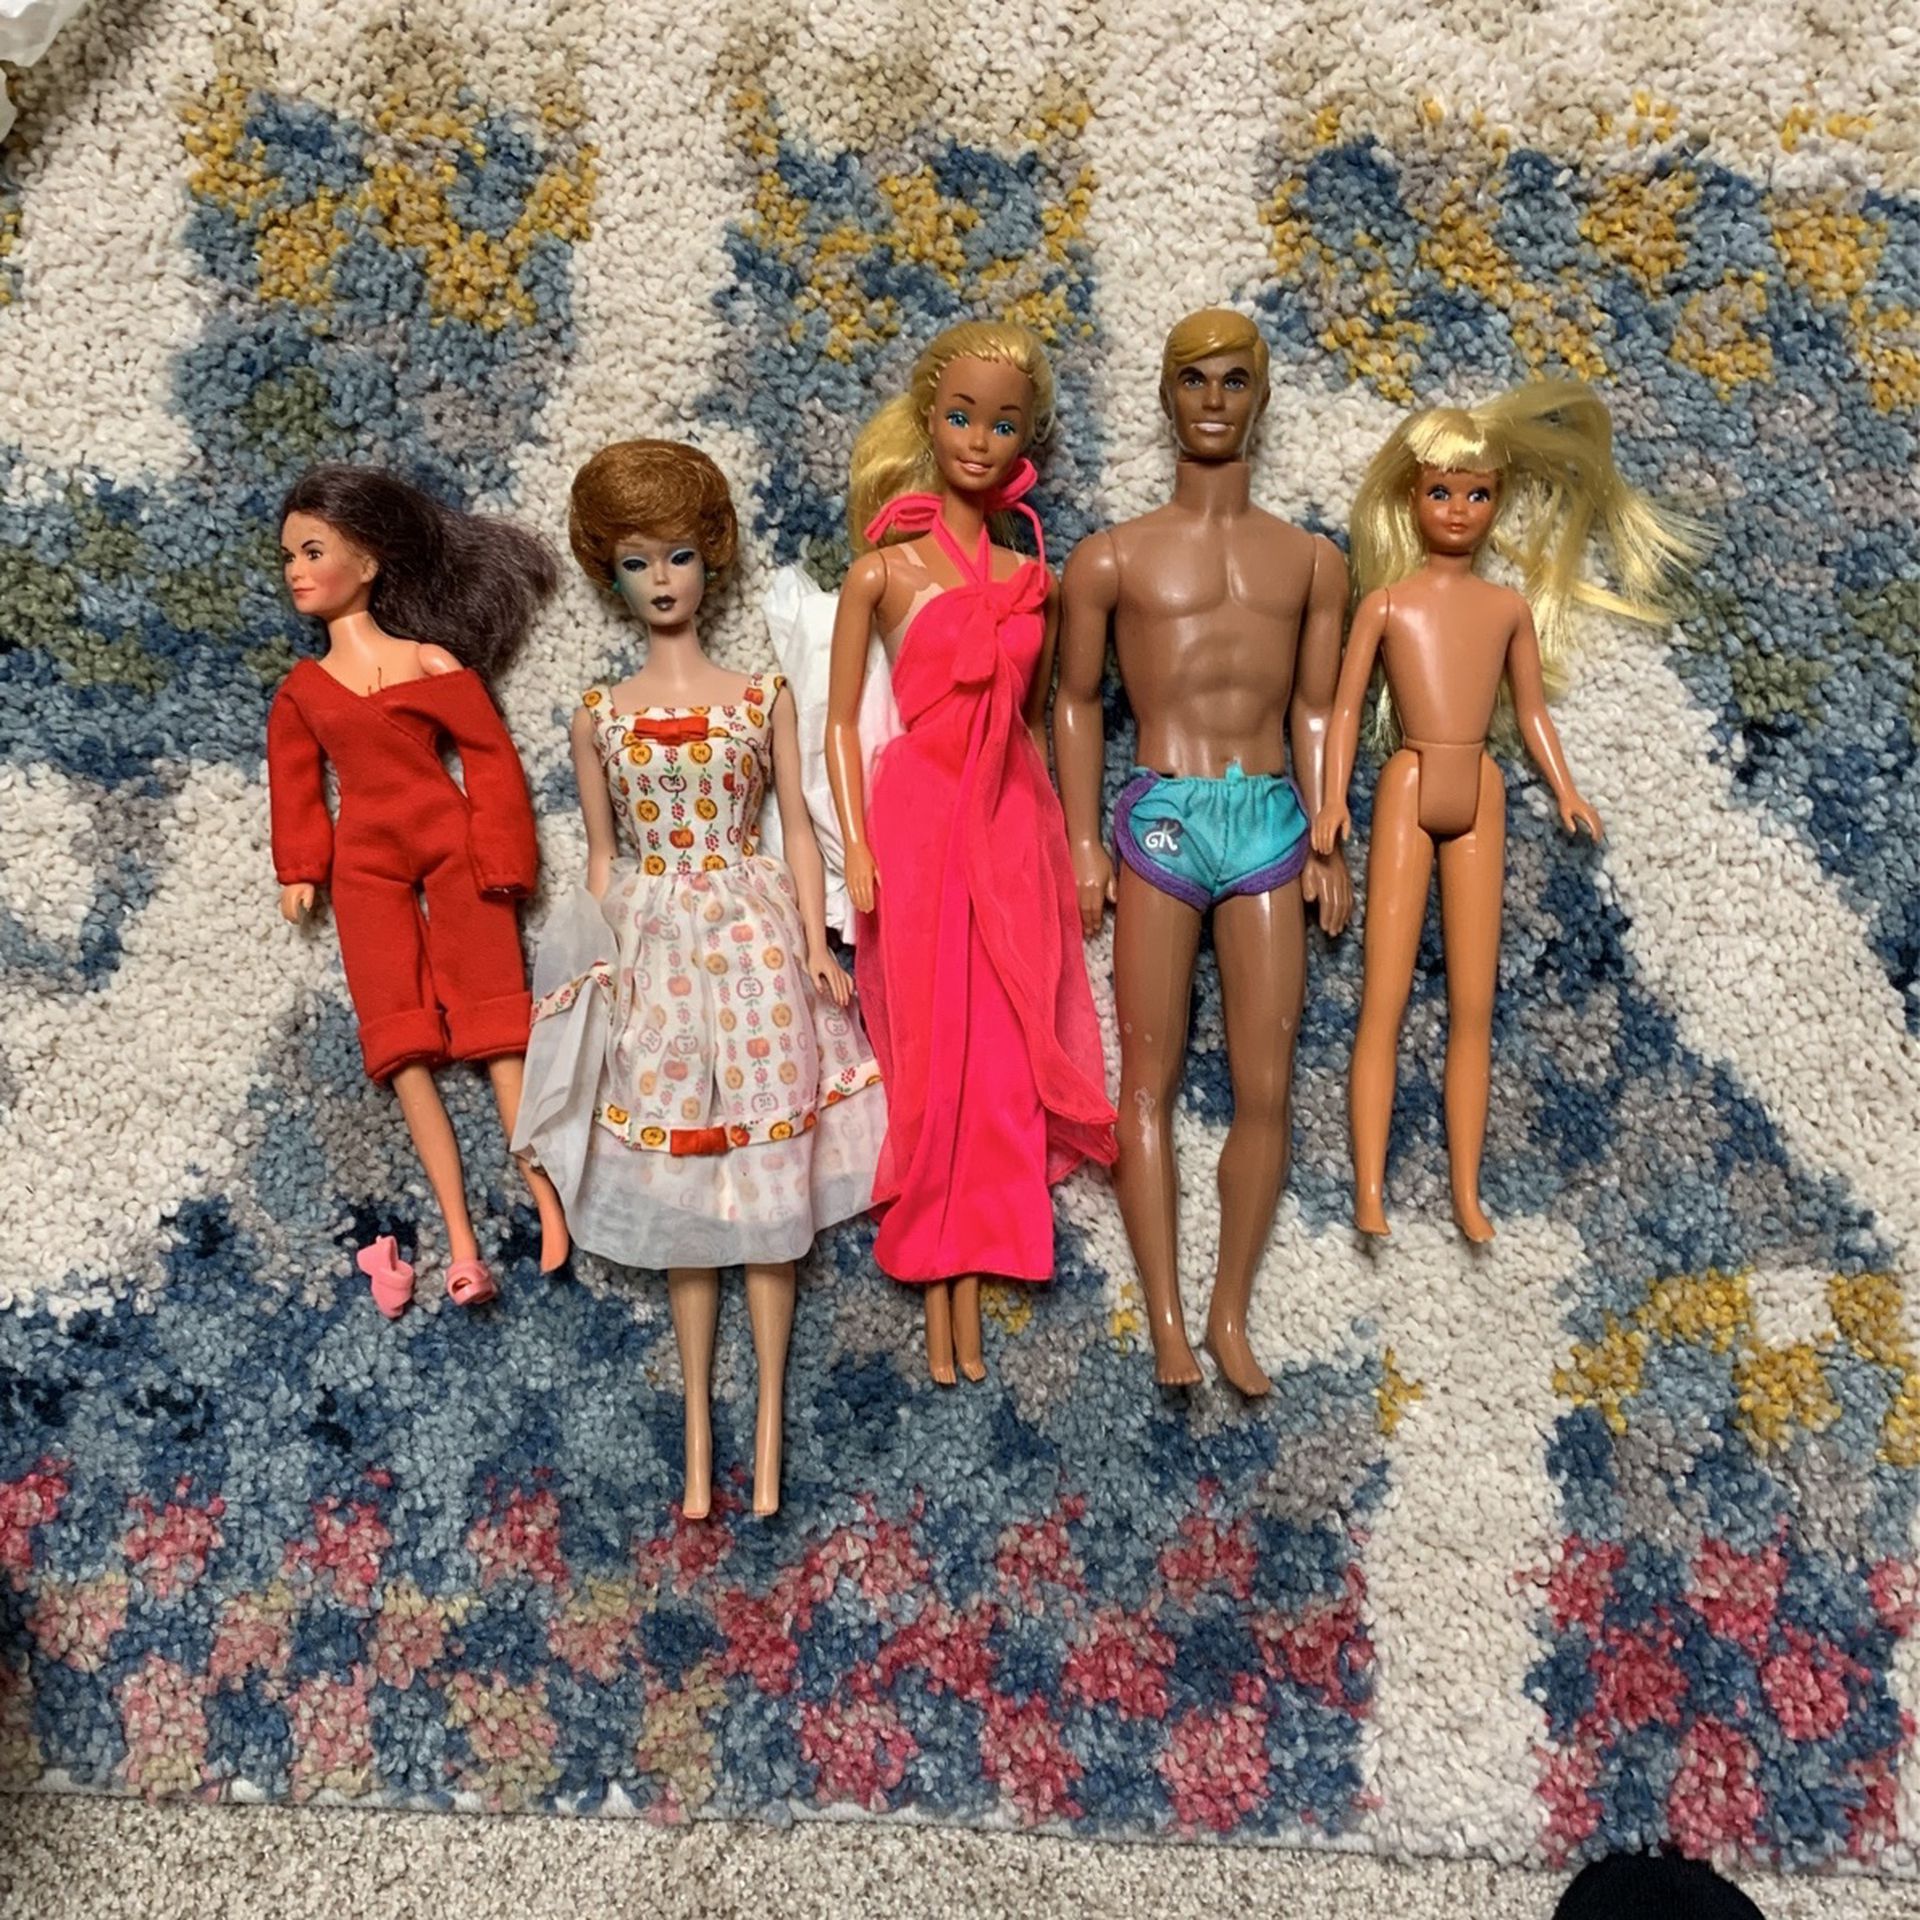 Vintage Barbie Dolls